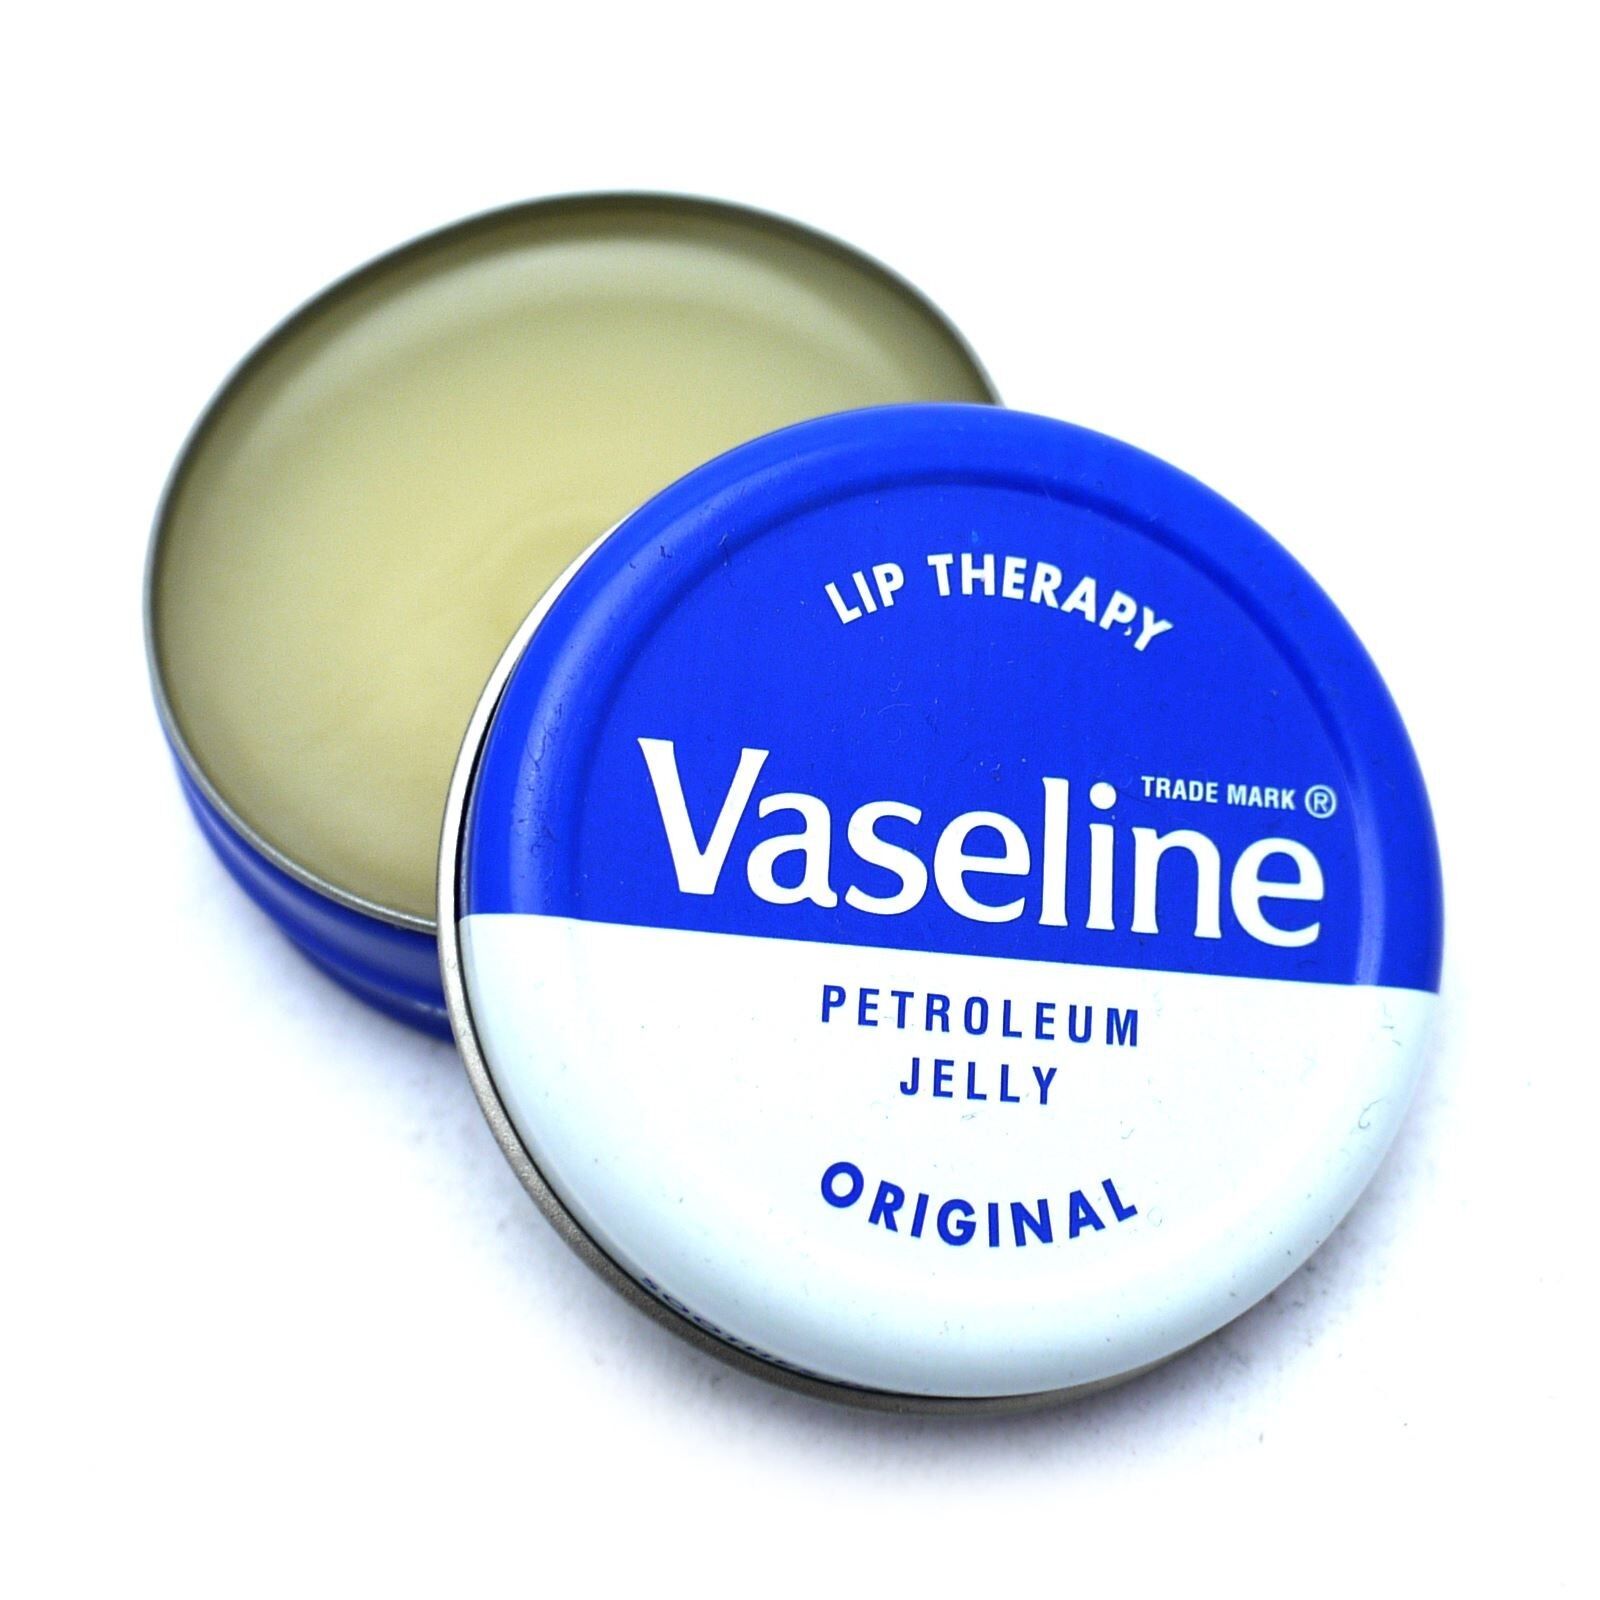 Lip Therapy Petroleum Jelly Original - 0.7 oz Lip Balm